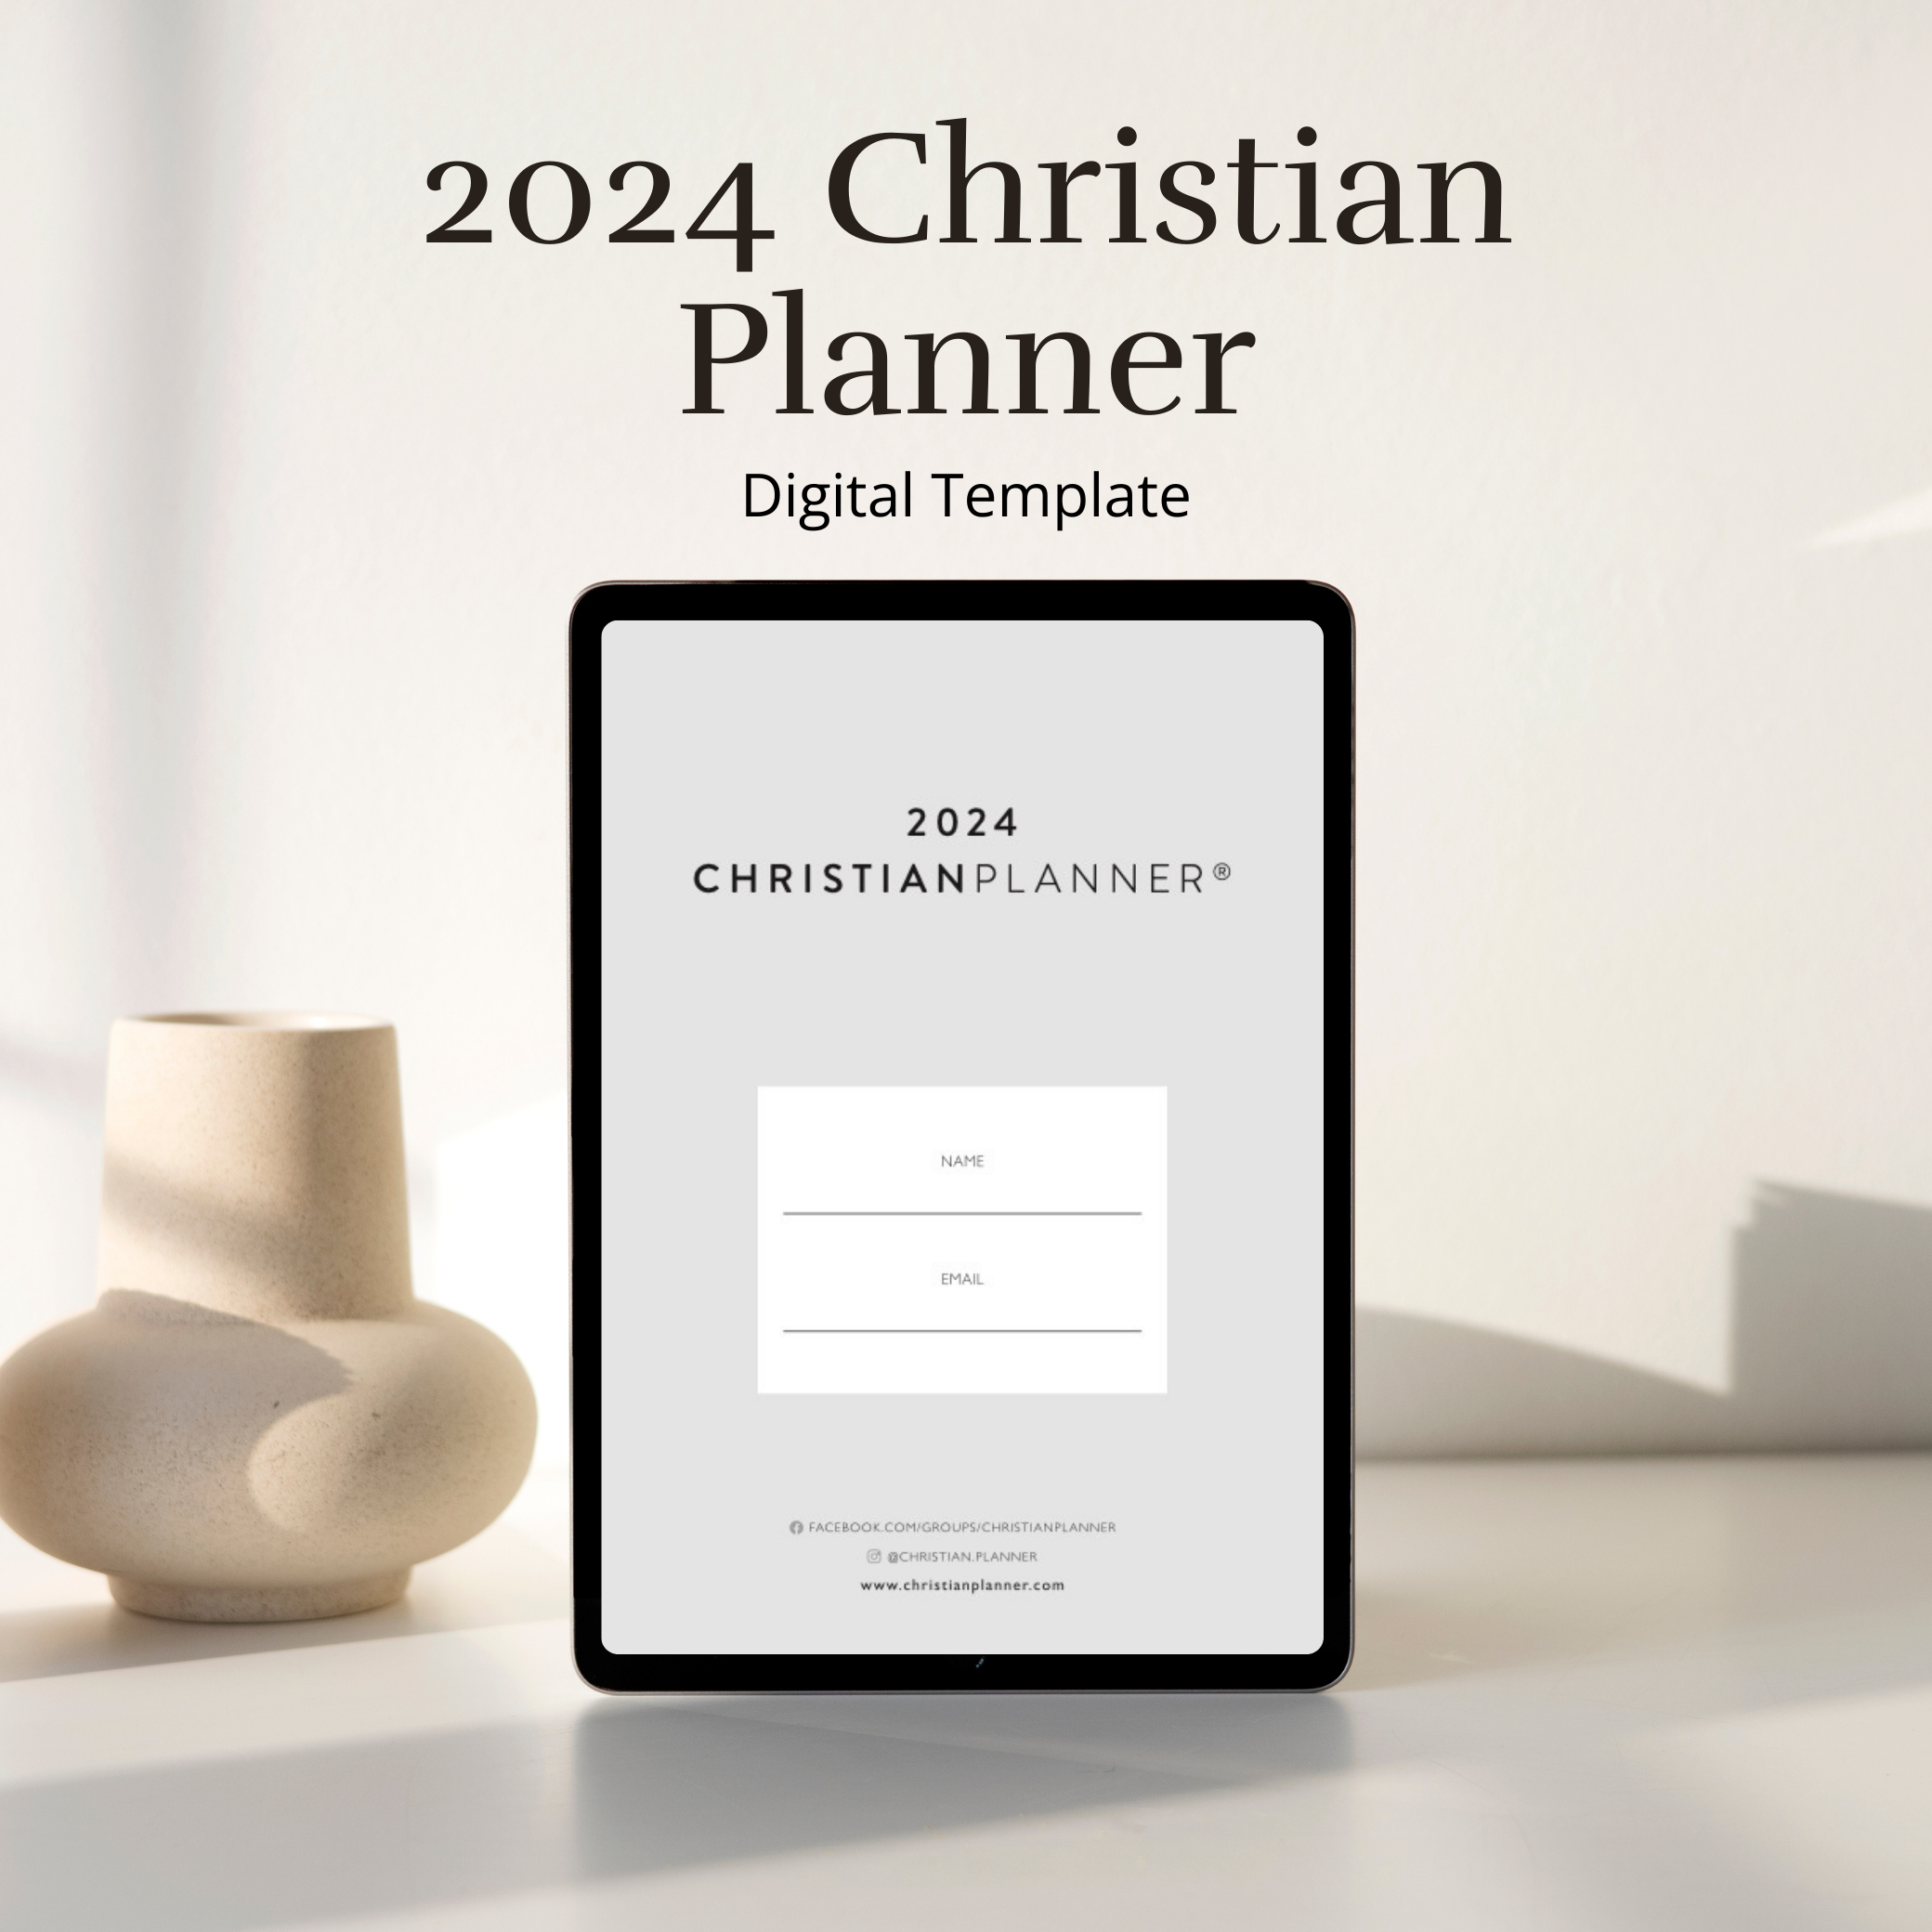 2024 Christian Planner Digital Edition